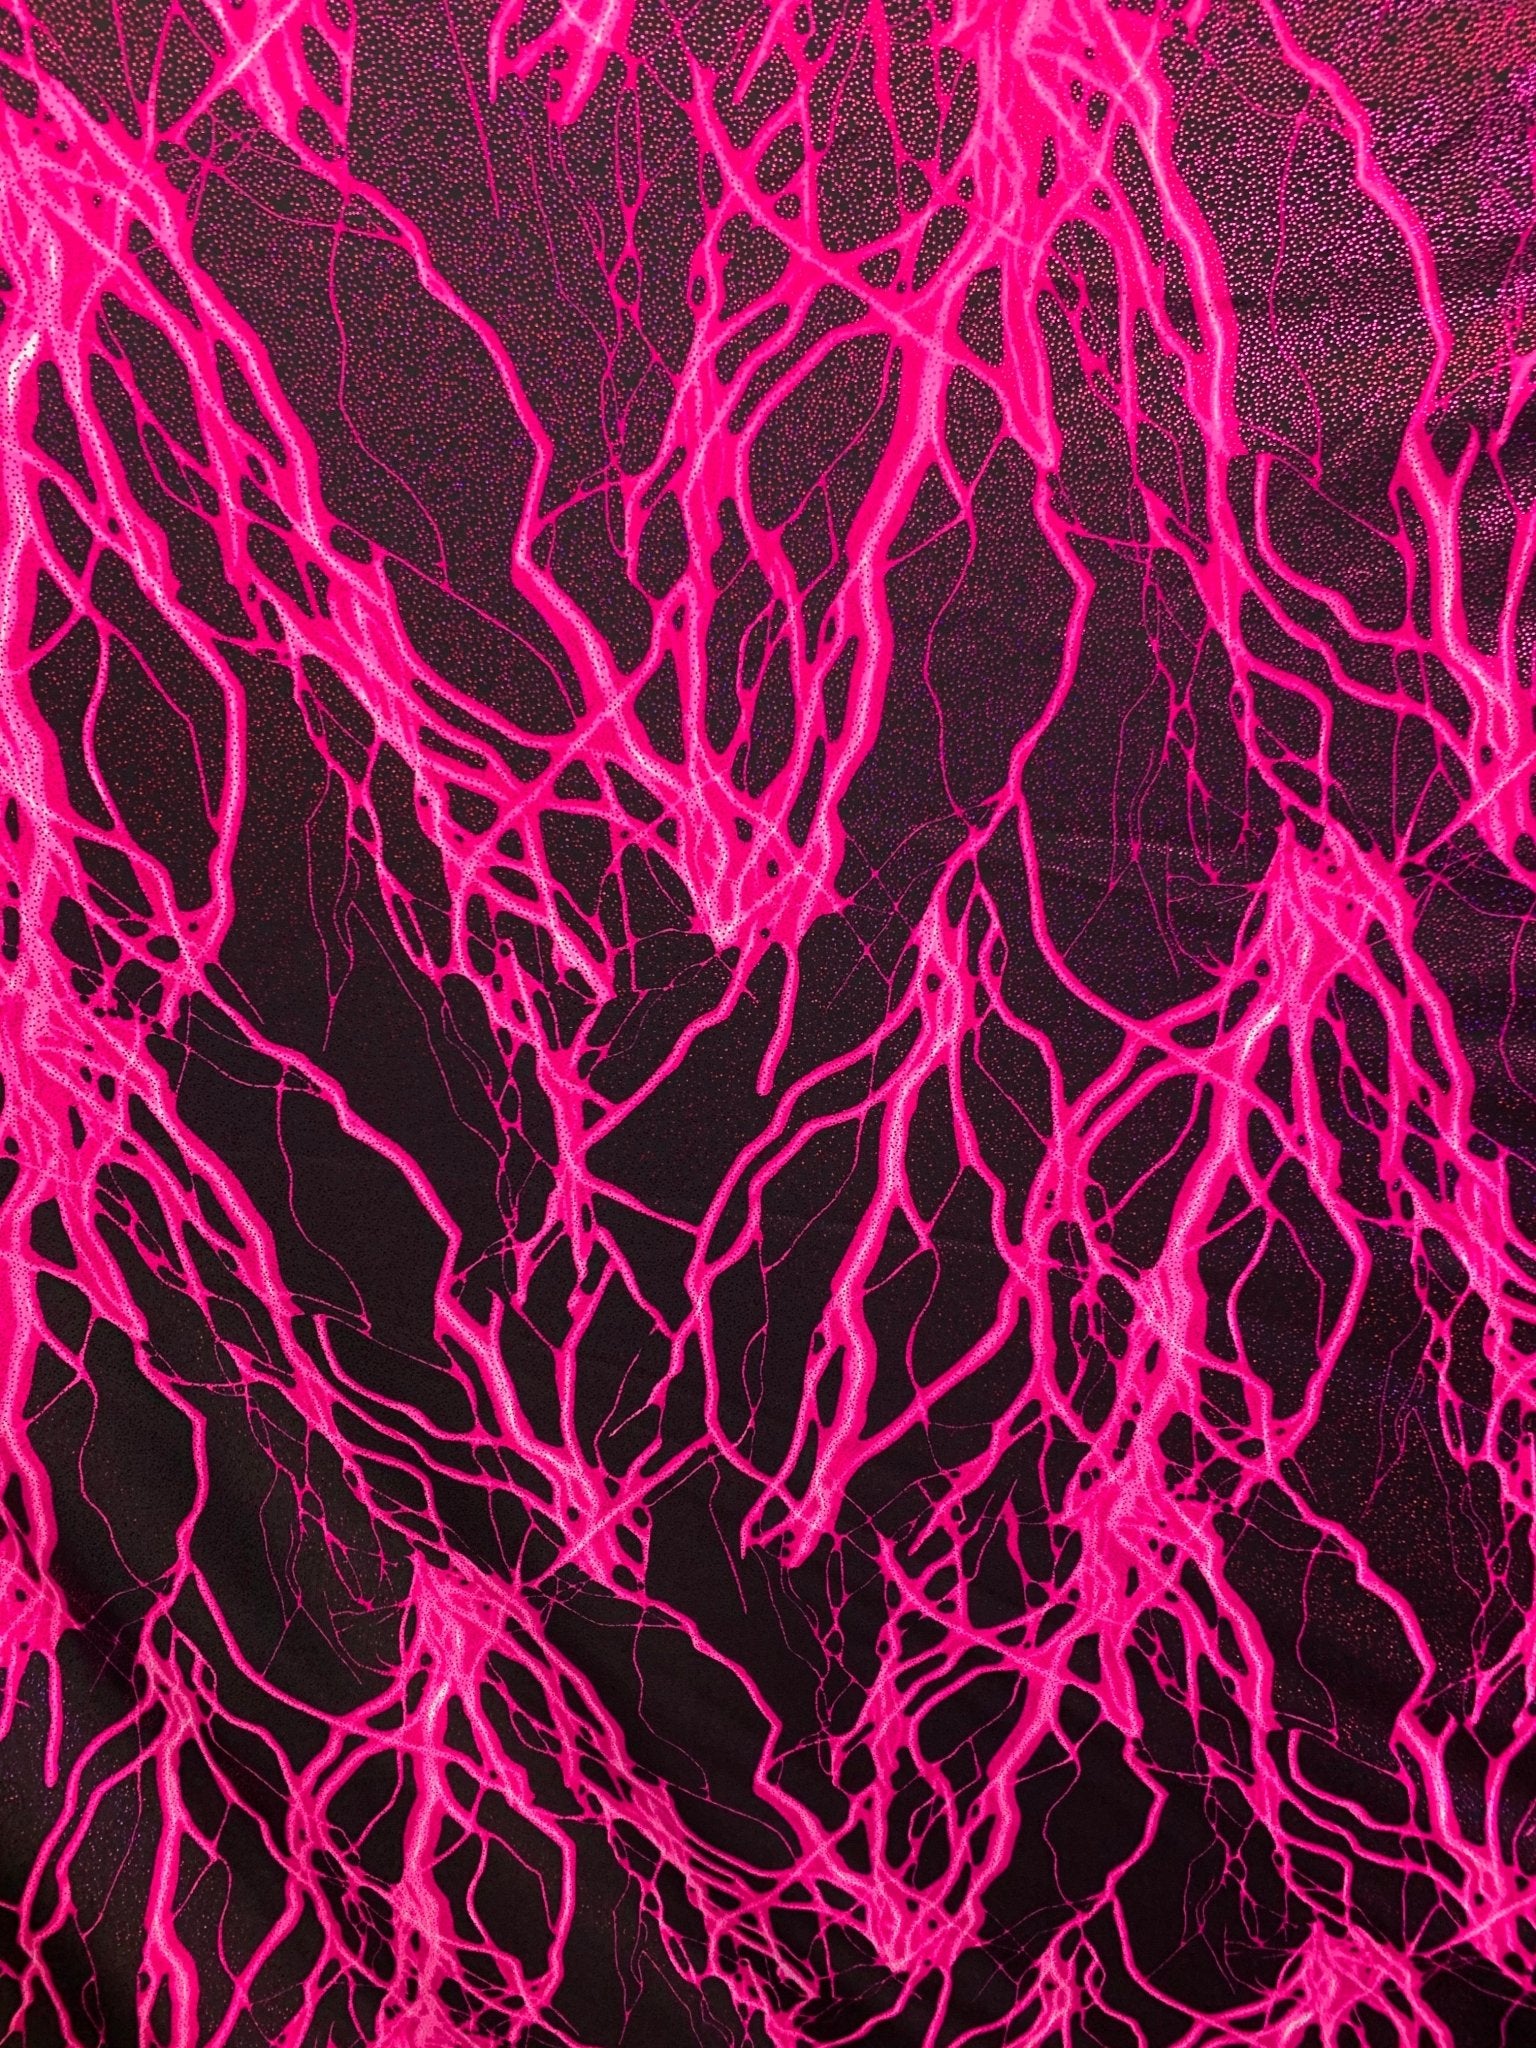 Lighting Bolt Fuchsia/Black Nylon Spandex Fabric By The YardSpandex FabricICEFABRICICE FABRICSLighting Bolt Fuchsia/Black Nylon Spandex Fabric By The Yard ICEFABRIC